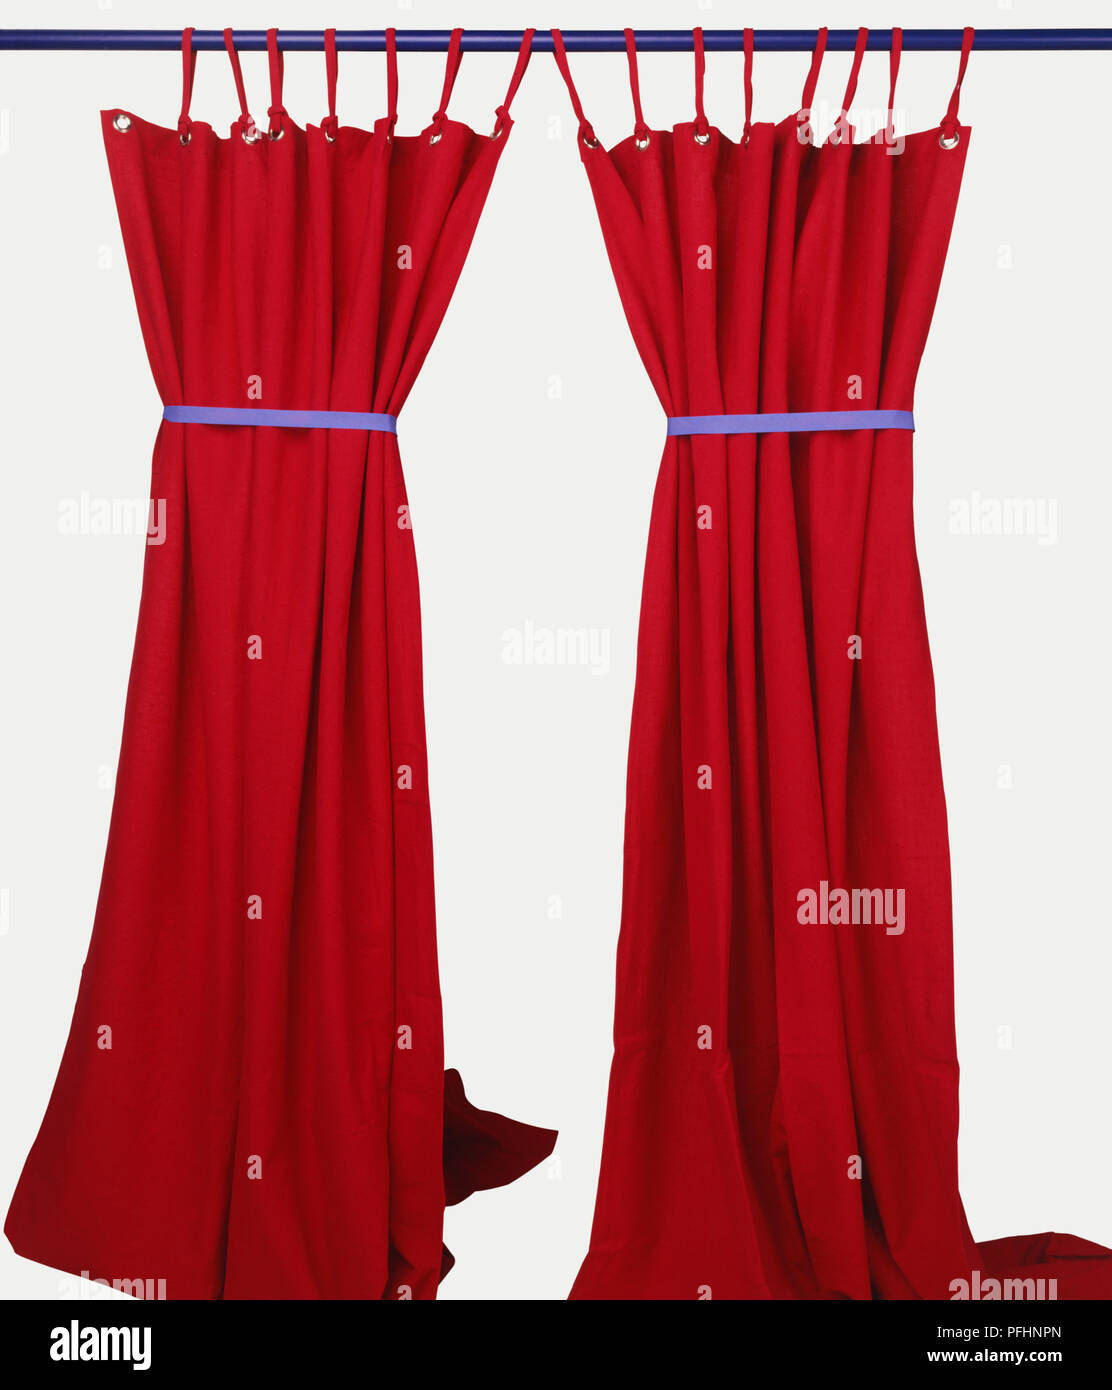 Due tende rosse appese ad una rampa. Foto Stock